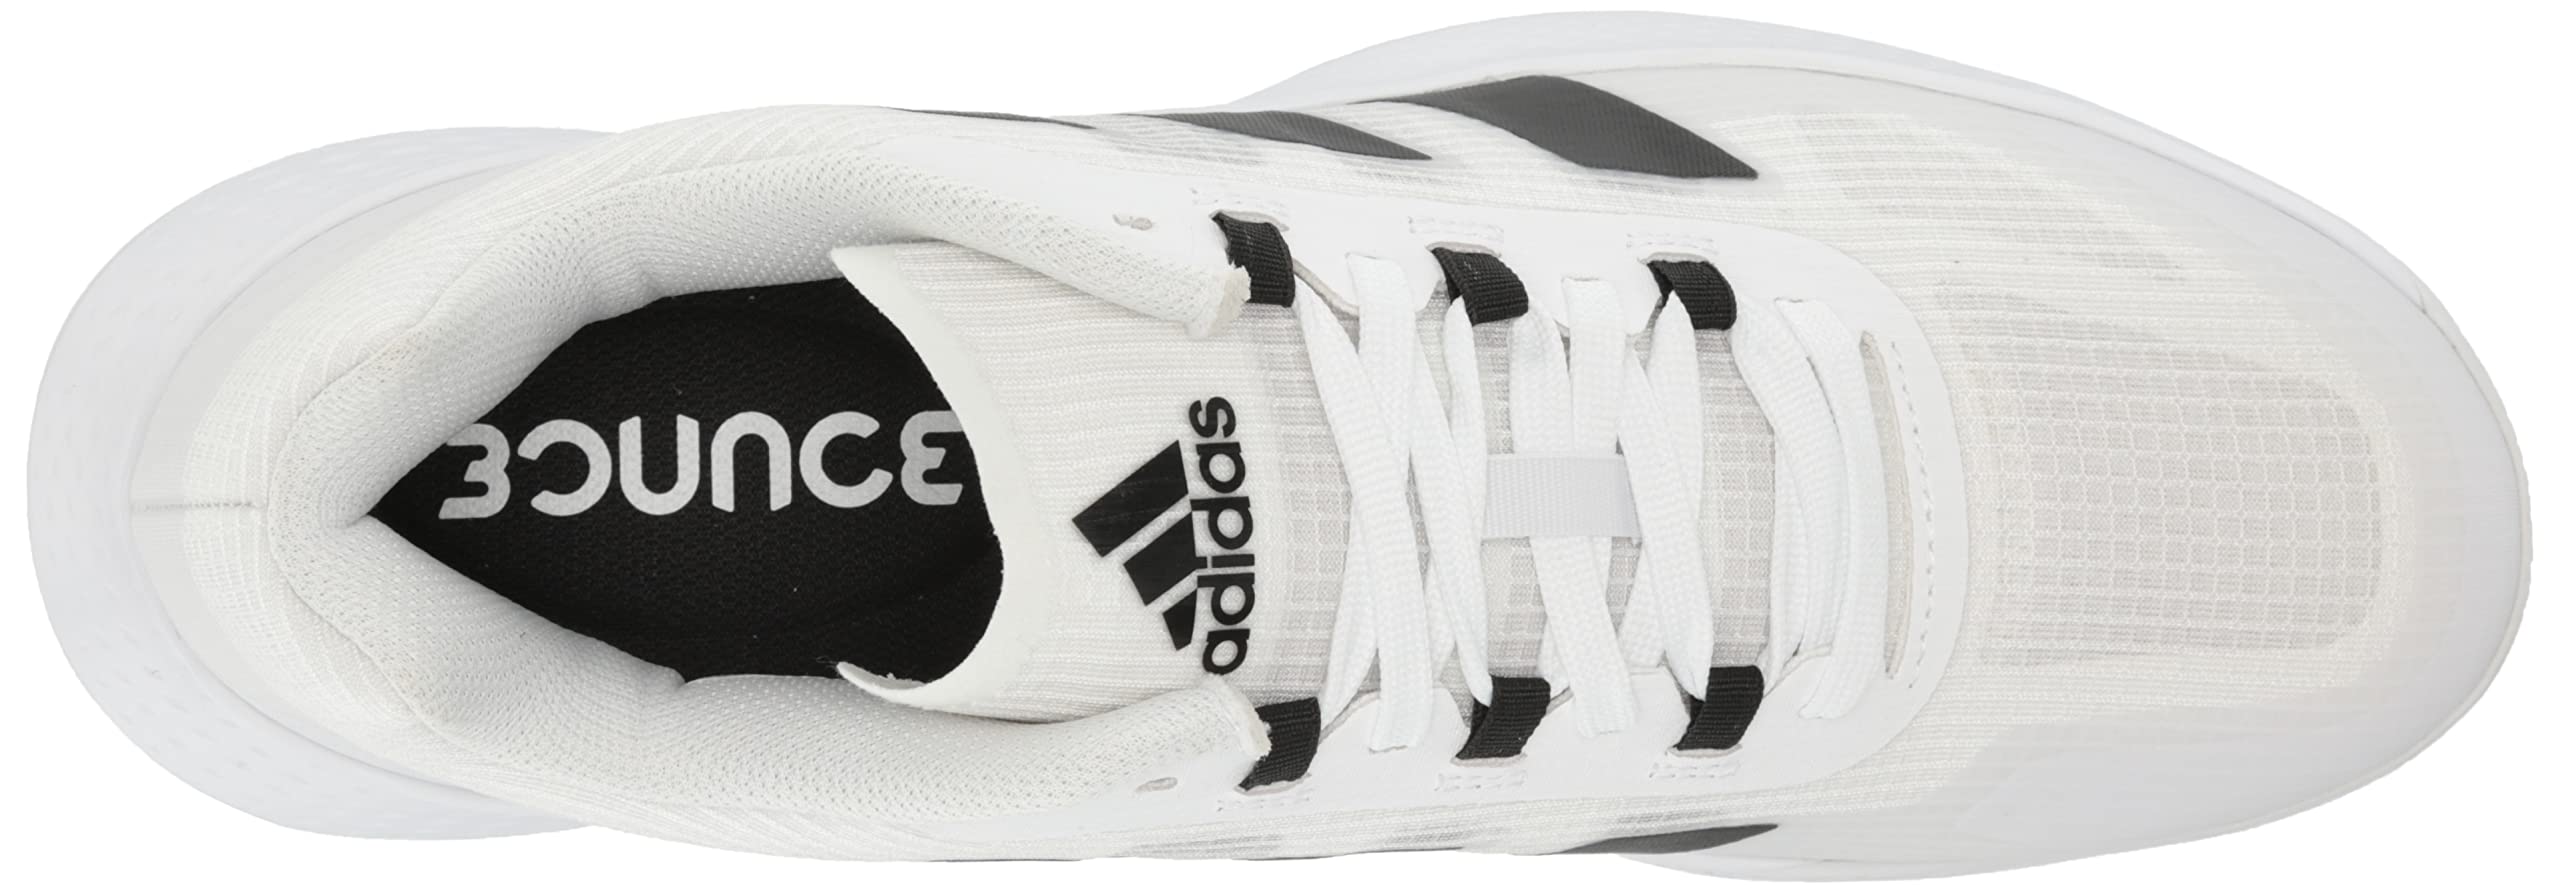 adidas Men's Forcebounce 2.0 Running Shoe